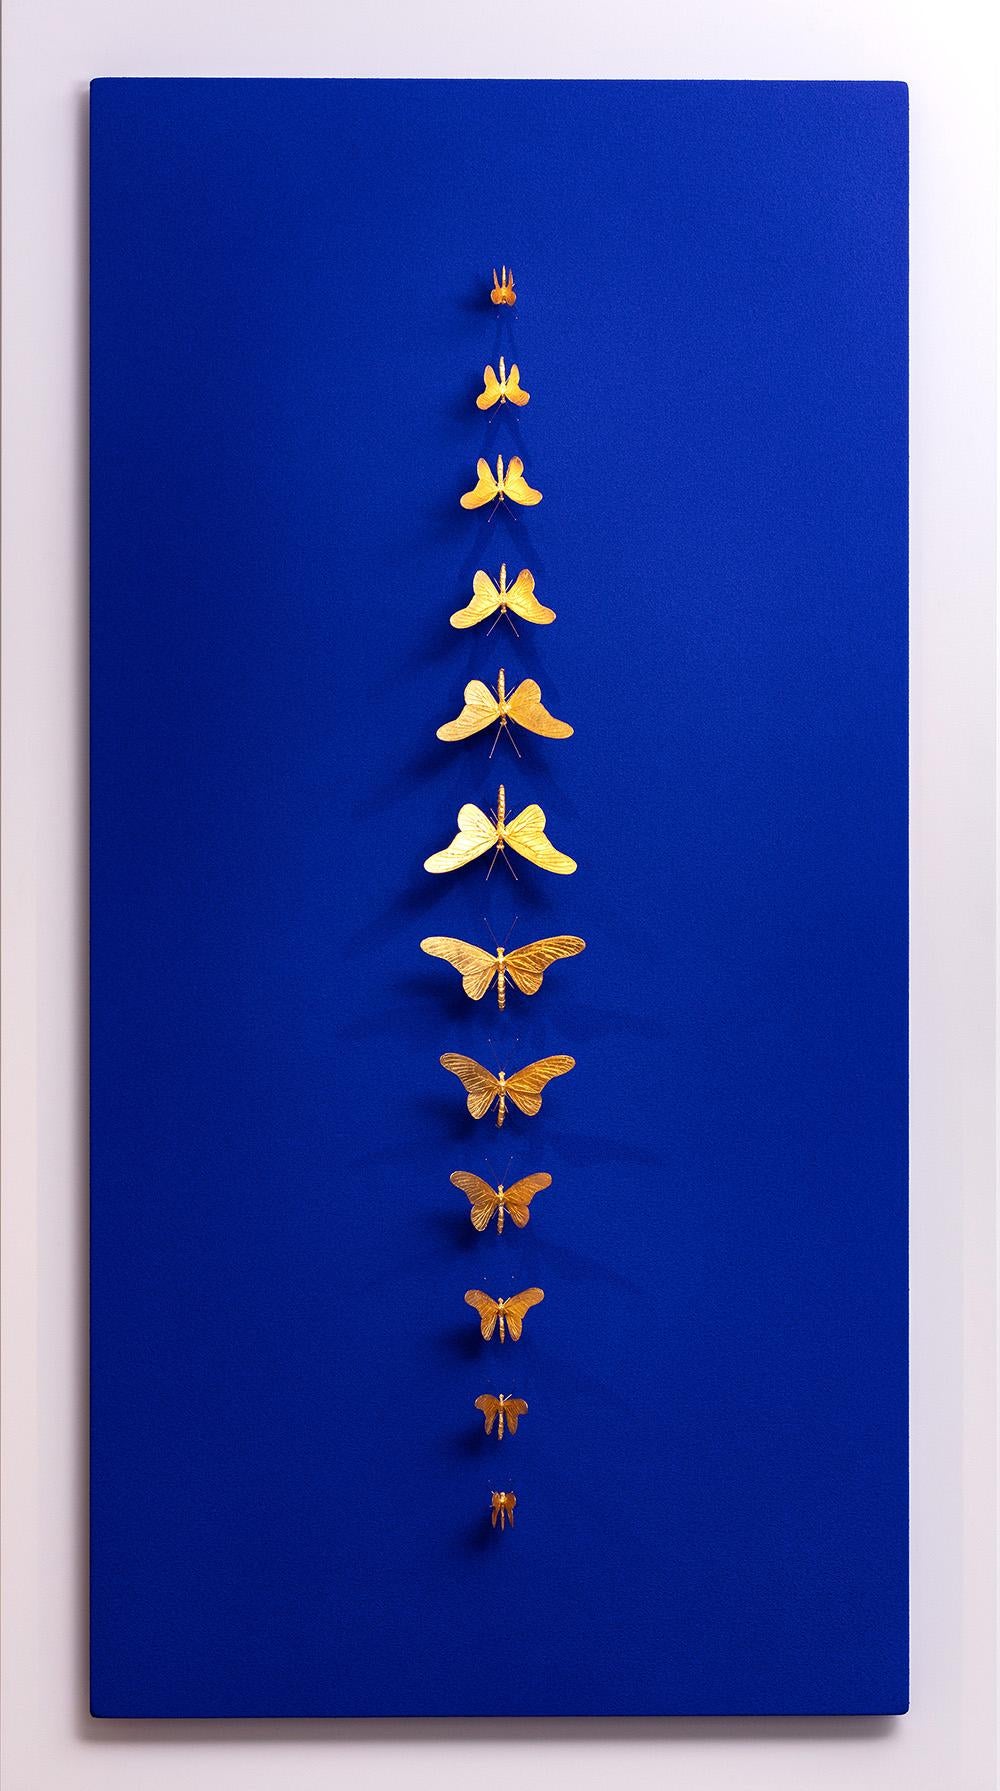 Samuel Dejong Figurative Painting -  Metamorphosis Redux - 21st Century, Contemporary Figurative, Golden Butterflies